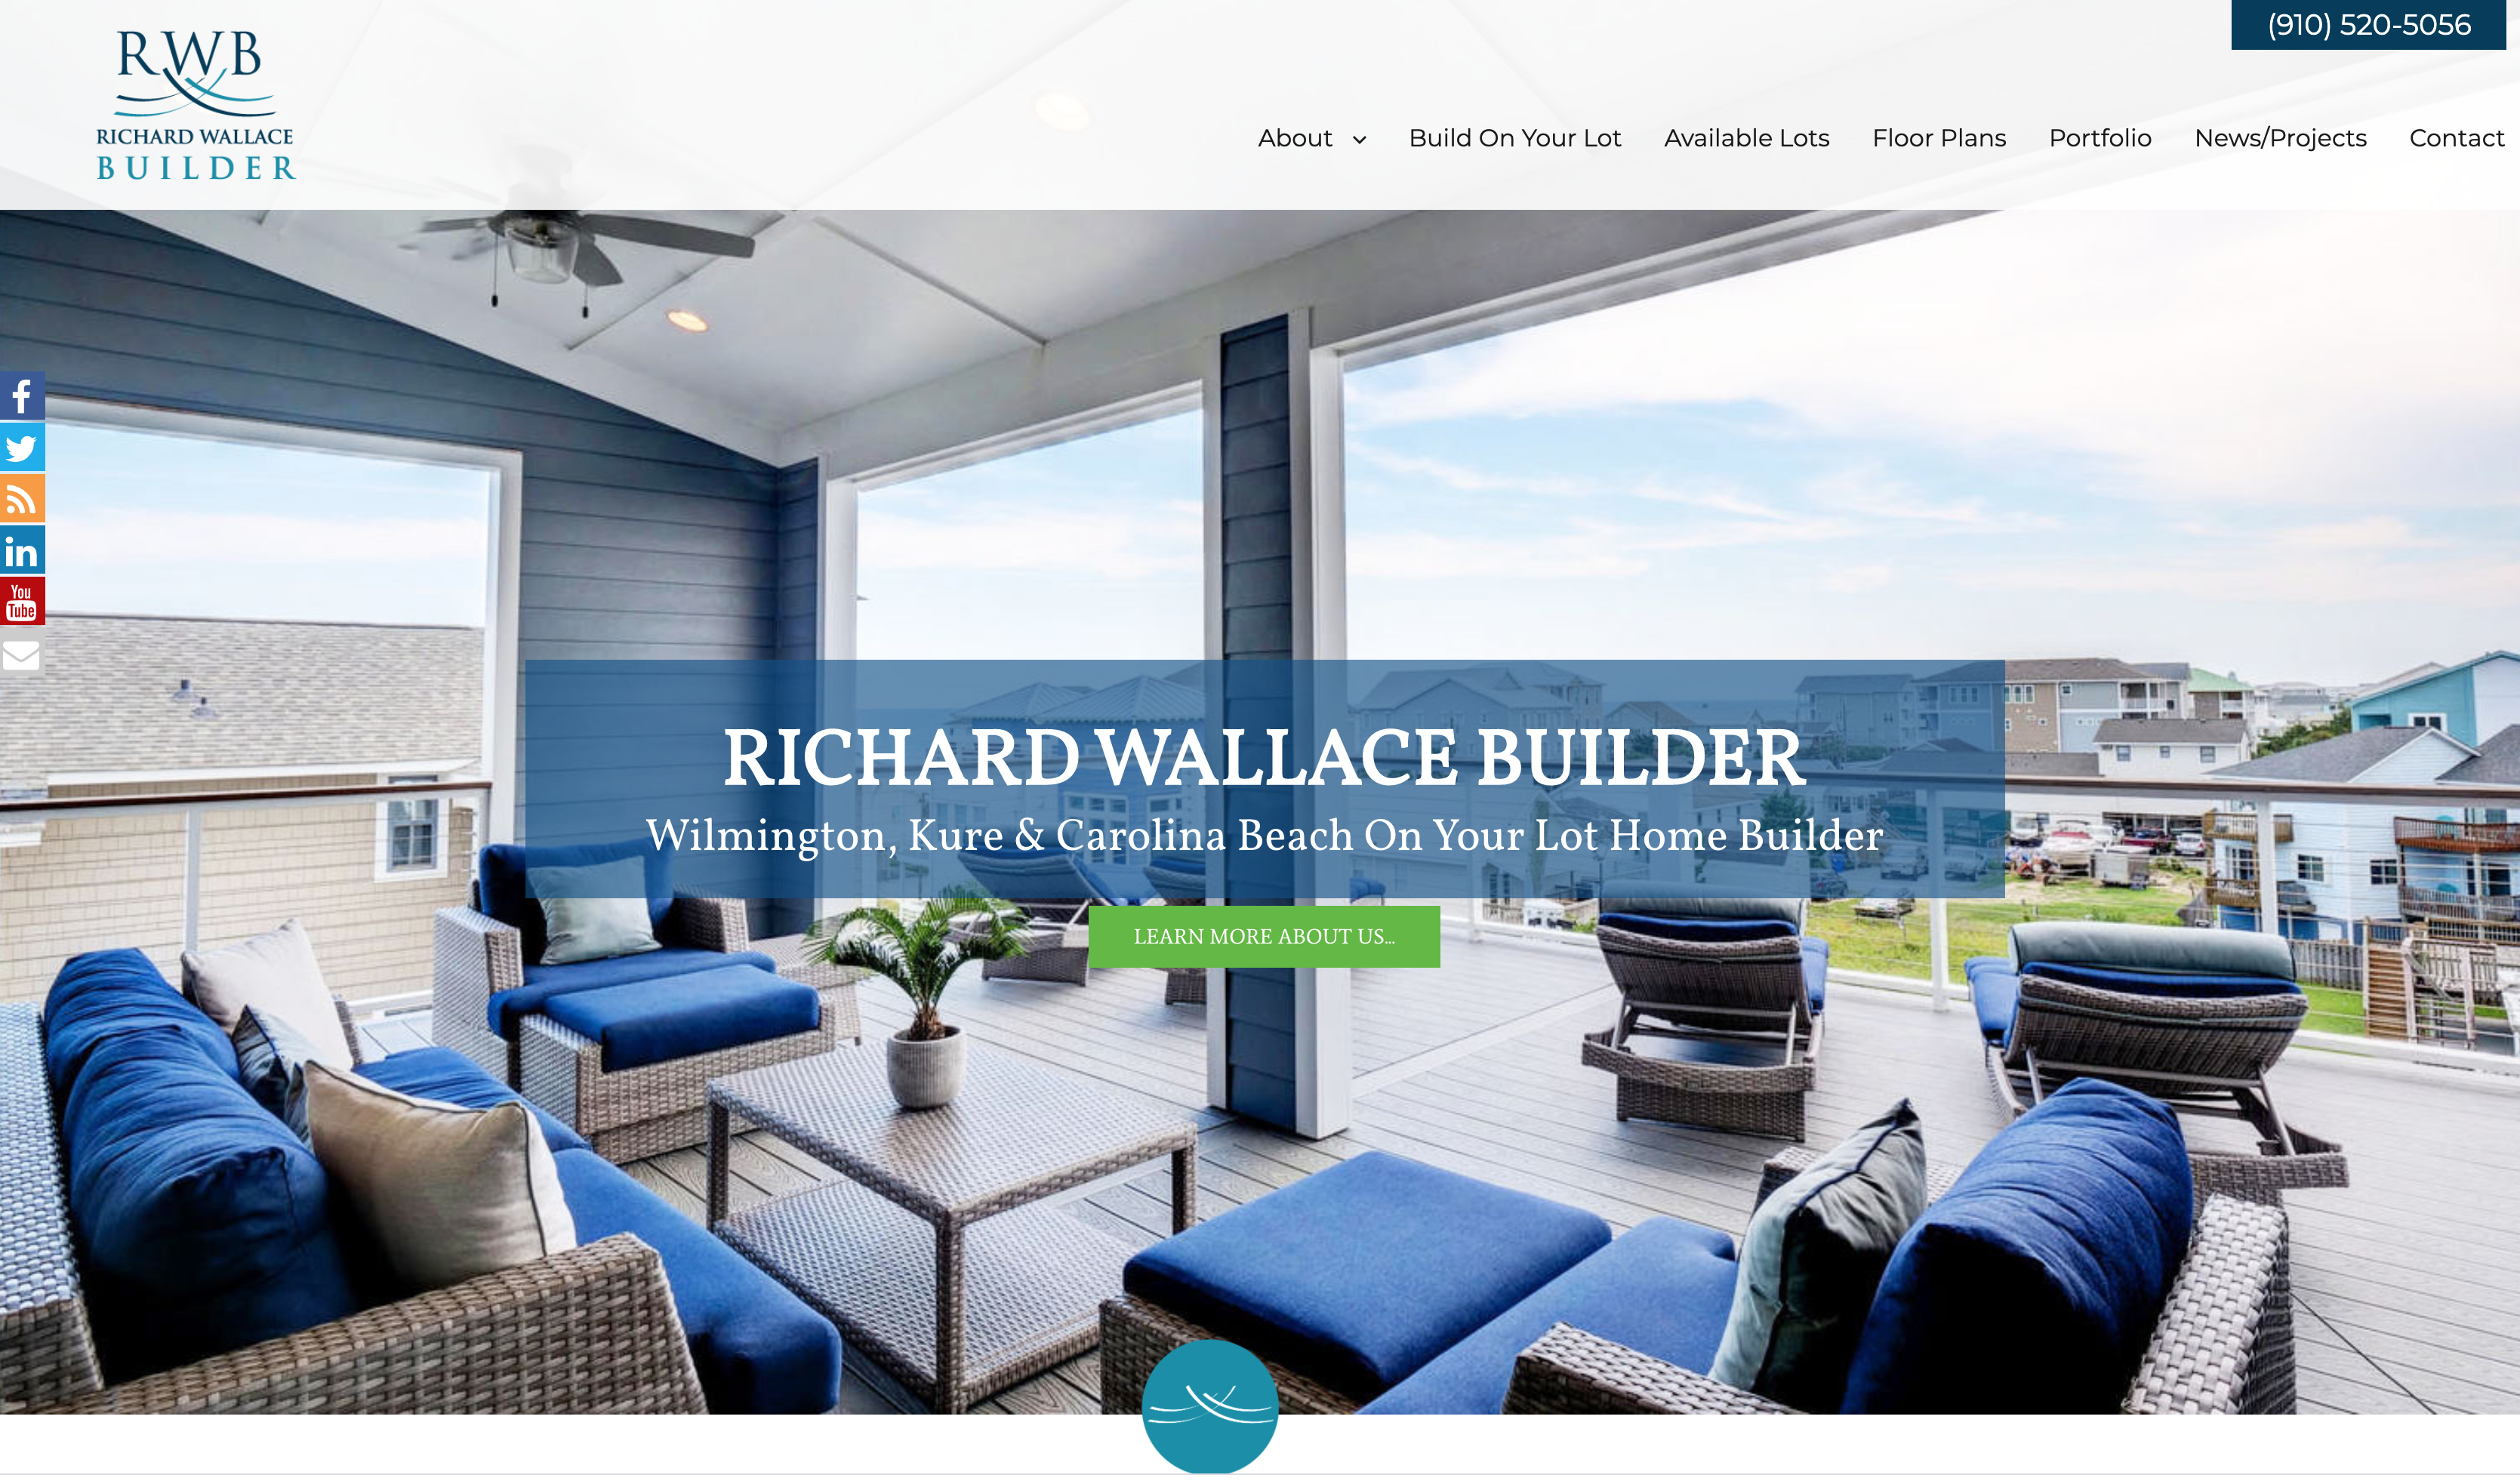 Richard Wallace Builder